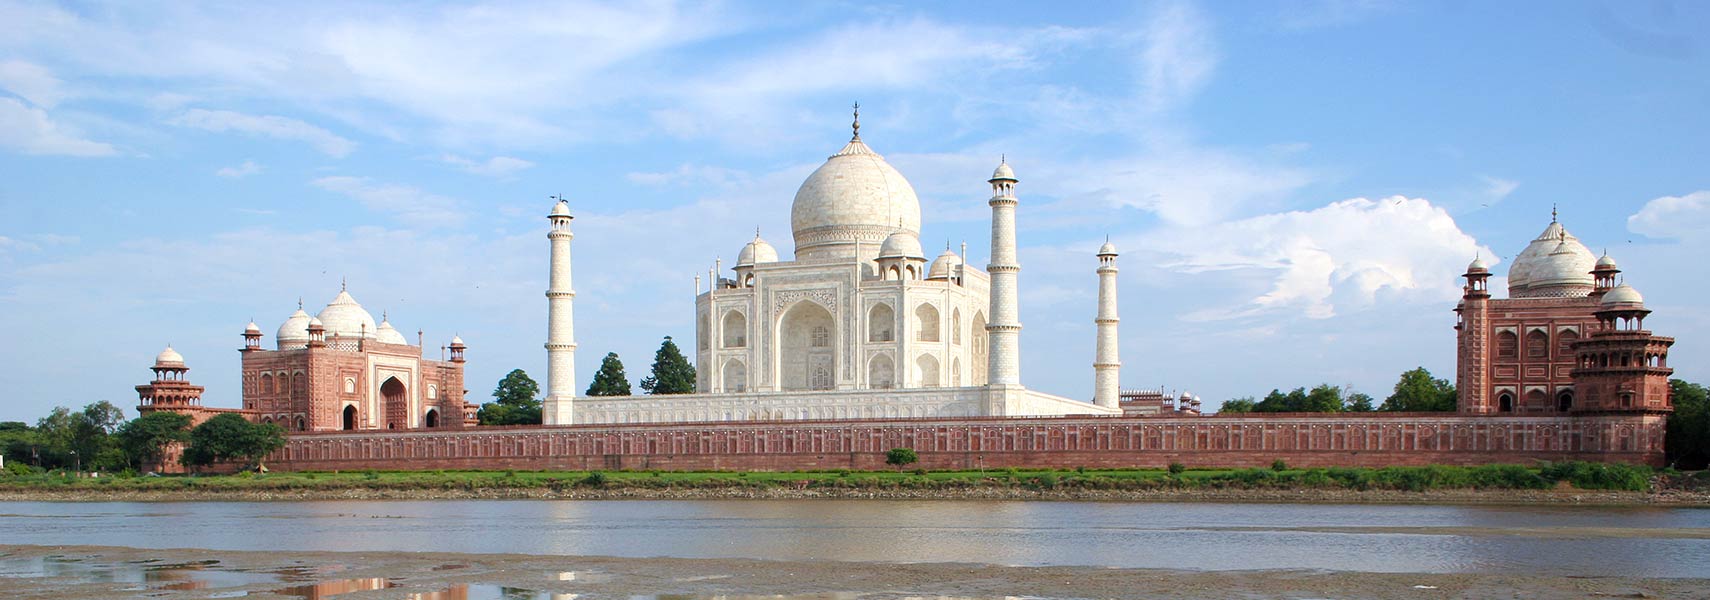 Taj Mahal at Yamuna river in Agra, Uttar Pradesh